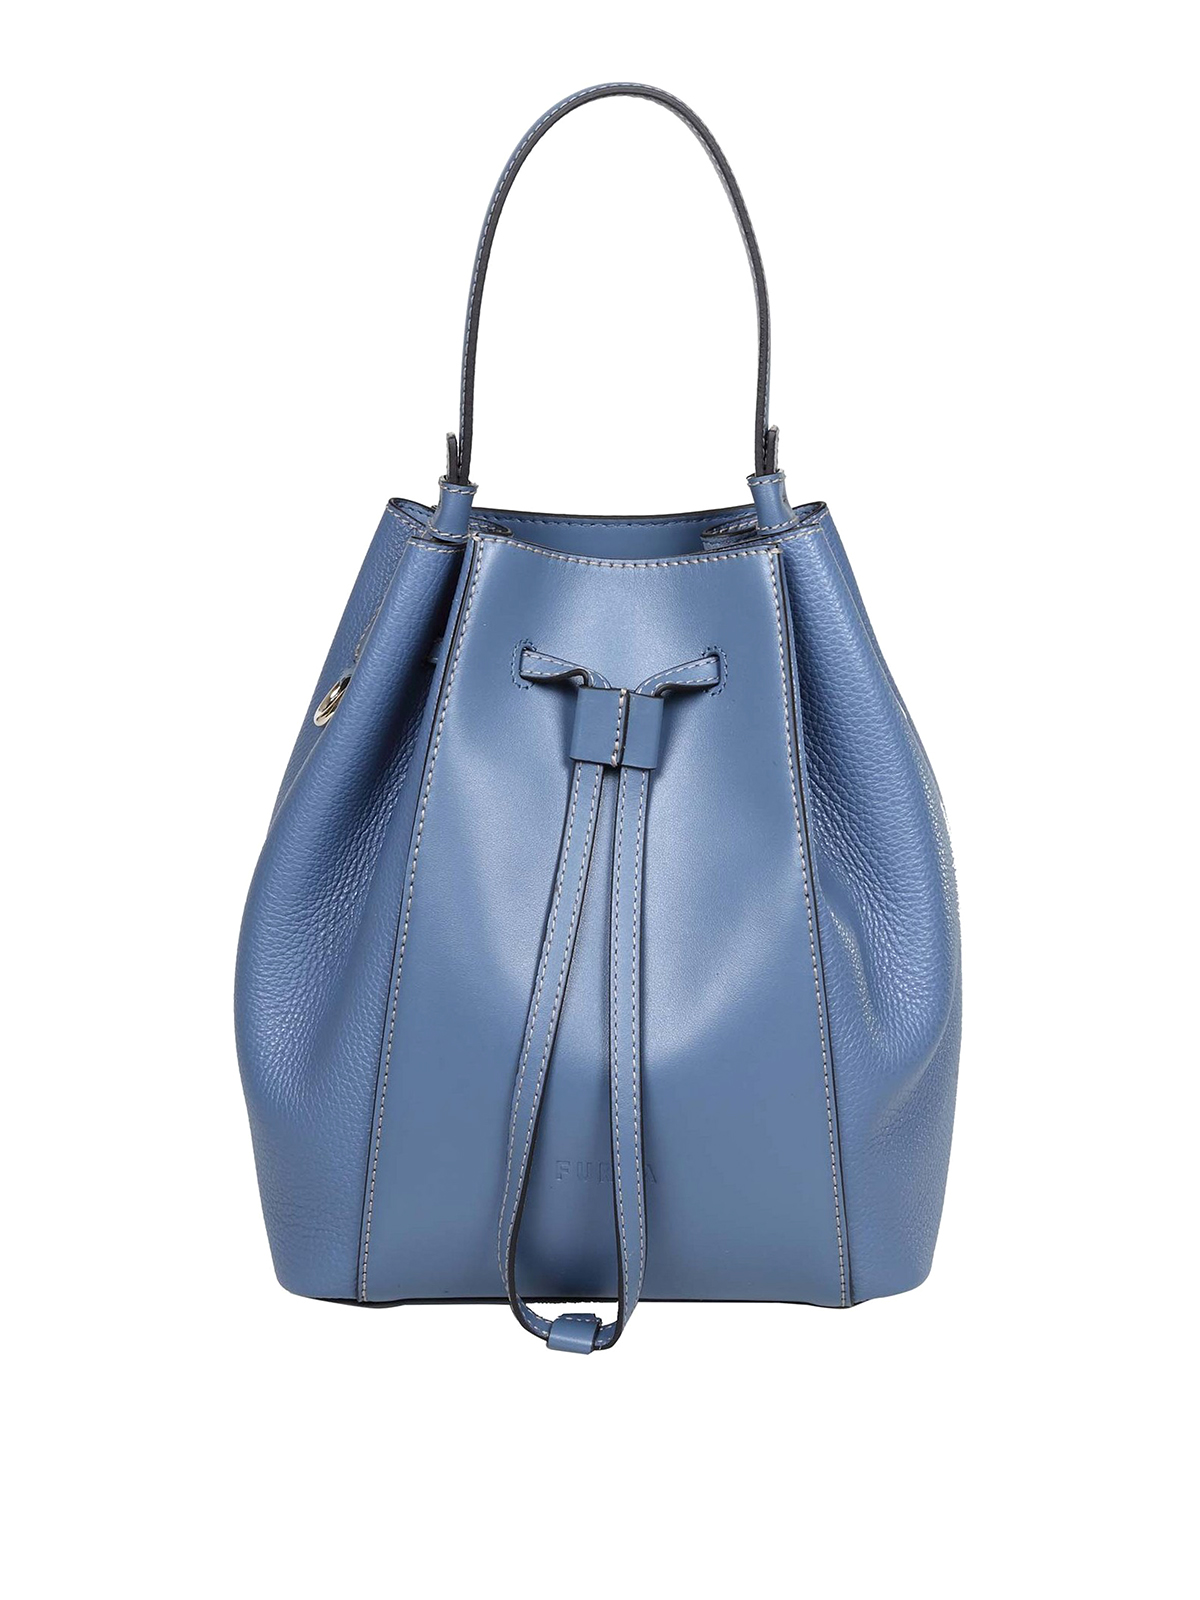 Furla Miastella Mini Leather Bucket Bag in Blue